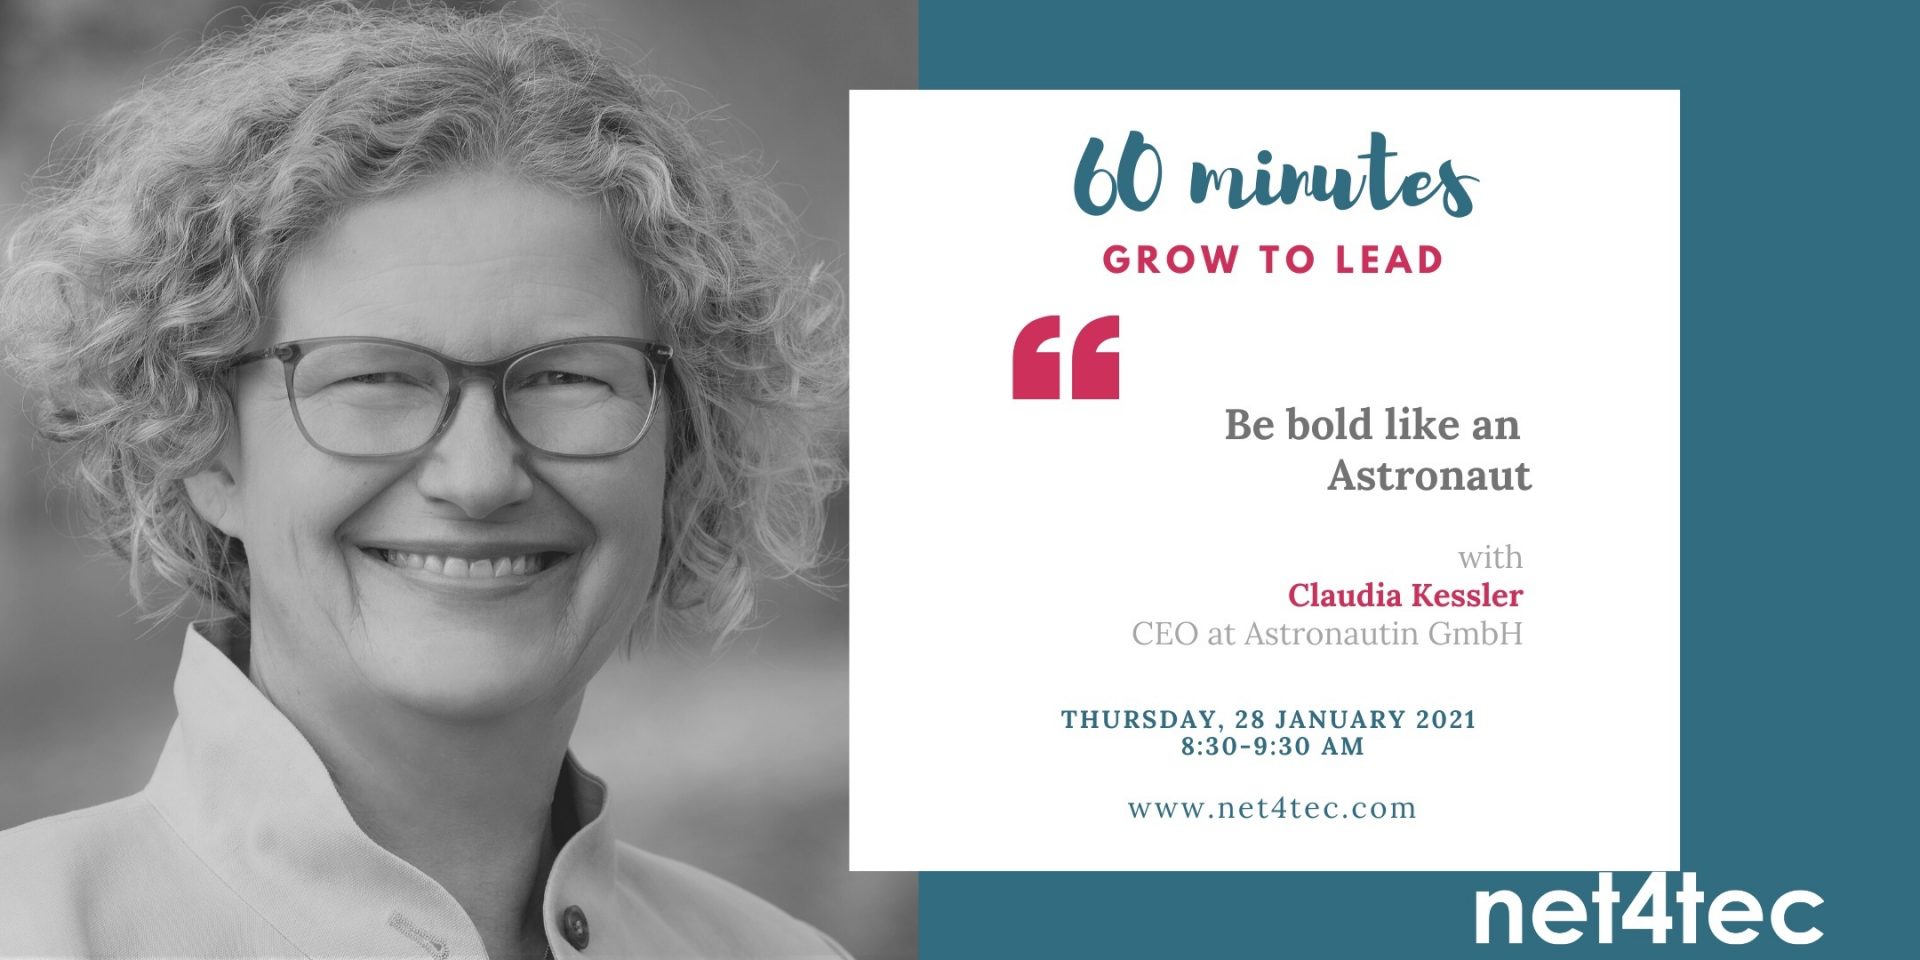 60' Grow to Lead with Claudia Kessler "Be bold like an Astronaut" 28.01.2021| net4tec